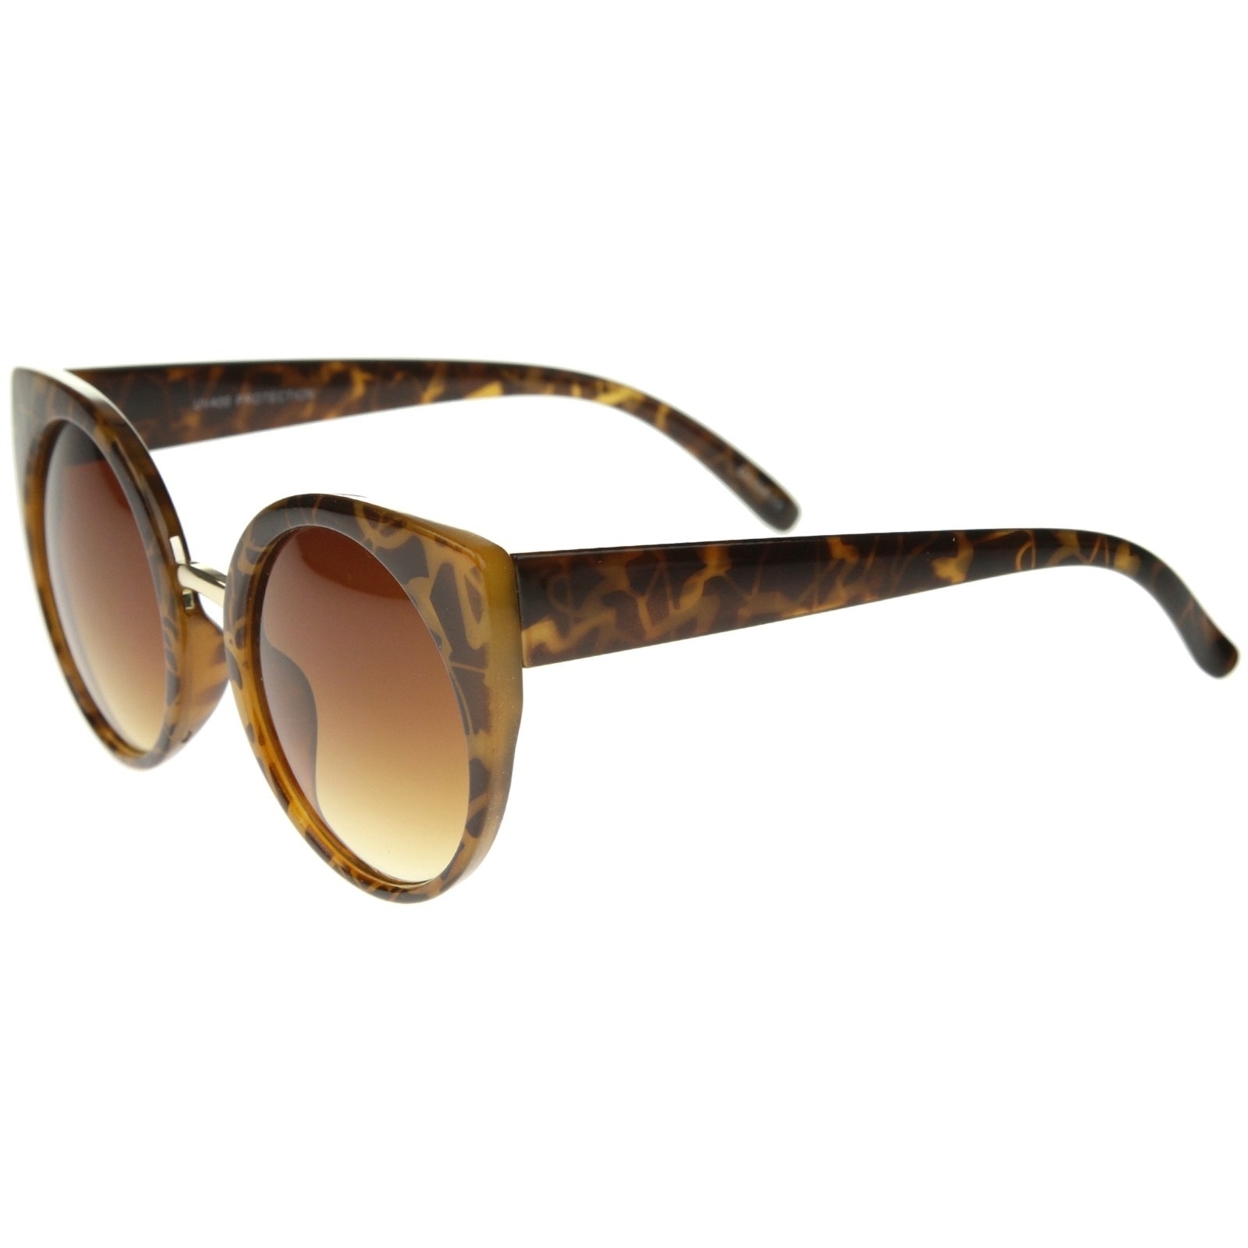 Women's High Fashion Oversize Round Lens Cat Eye Sunglasses 55mm - Tortoise-Gold / Amber